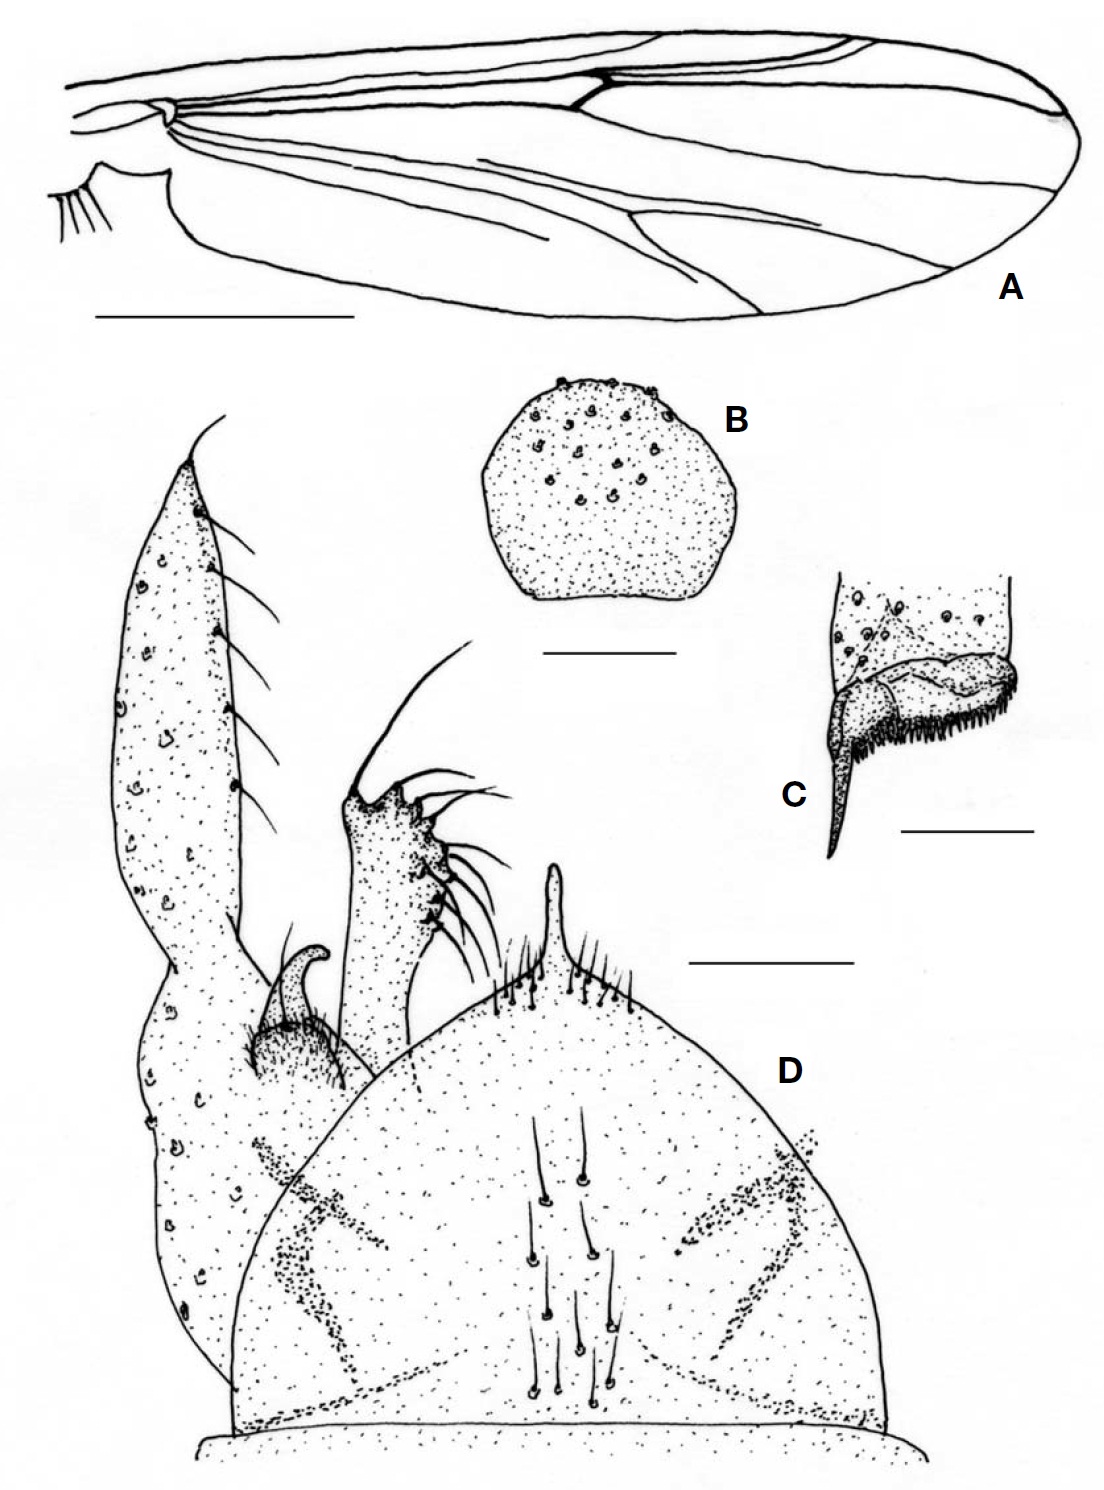 Polypedilum macrohemisphere sp. nov. (male). A, Wing; B, Clypeus; C, Hind tibial combs; D, Hypopygium. Scale bars: A=0.5
mm, B-D=0.05 μm.